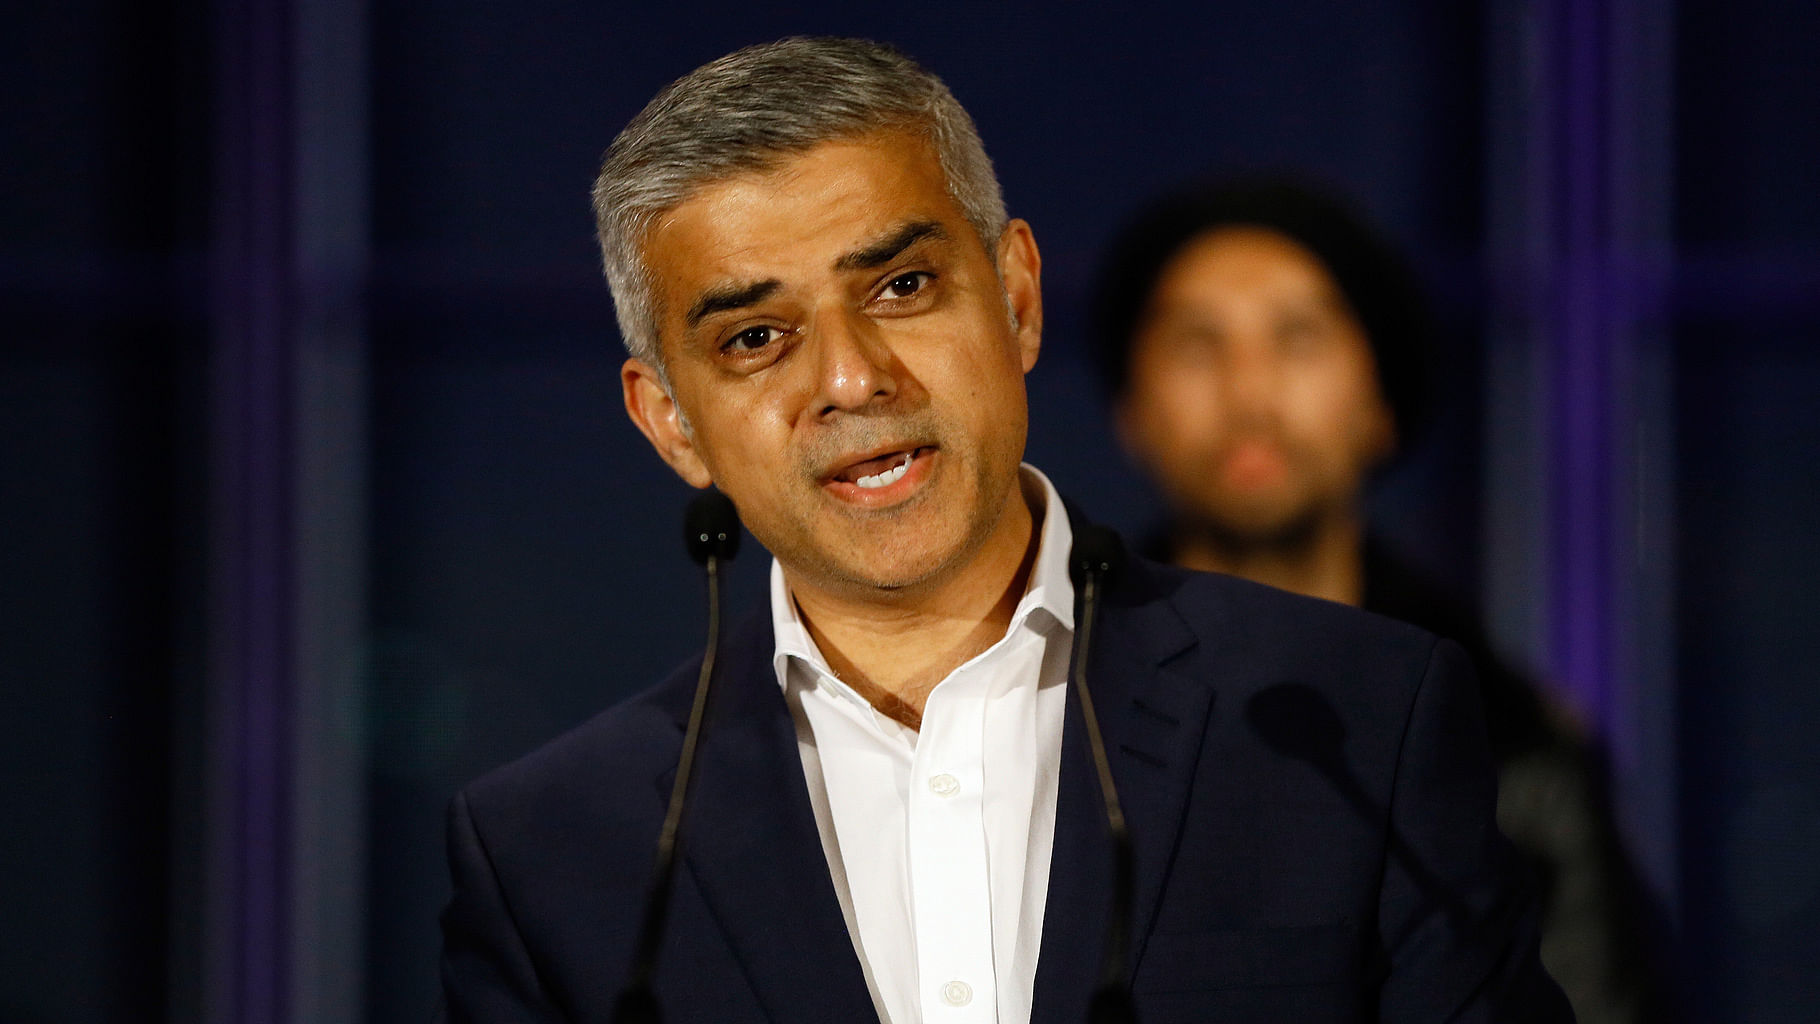 Sadiq Khan has become London’s first Muslim Mayor. (Photo: AP)